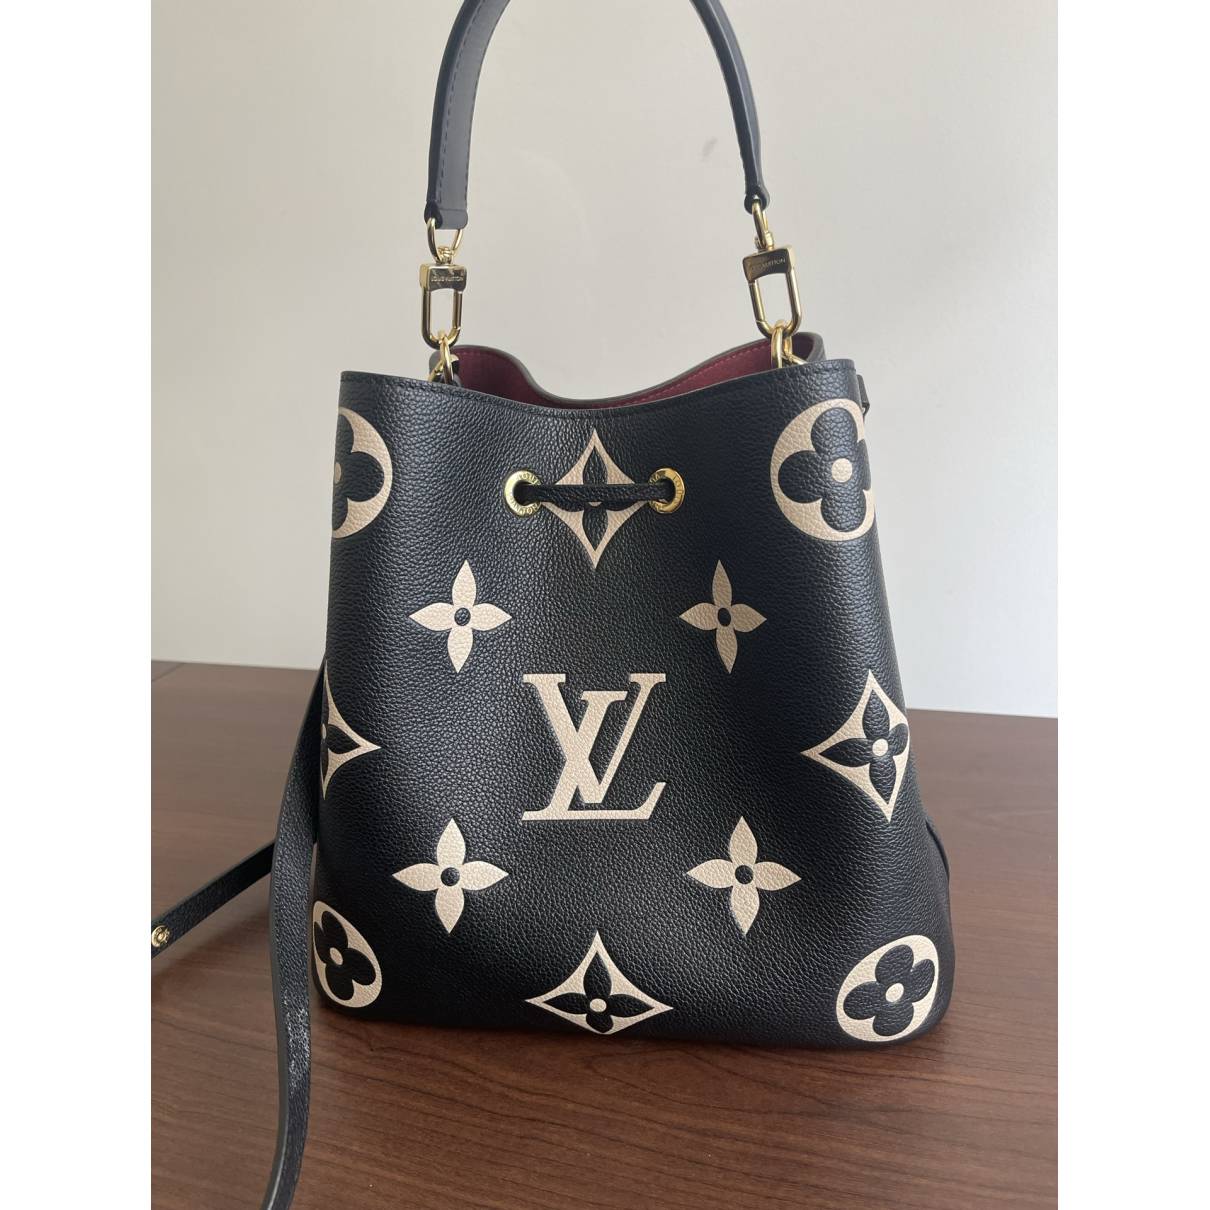 Louis Vuitton Black Colorful Bags & Handbags for Women